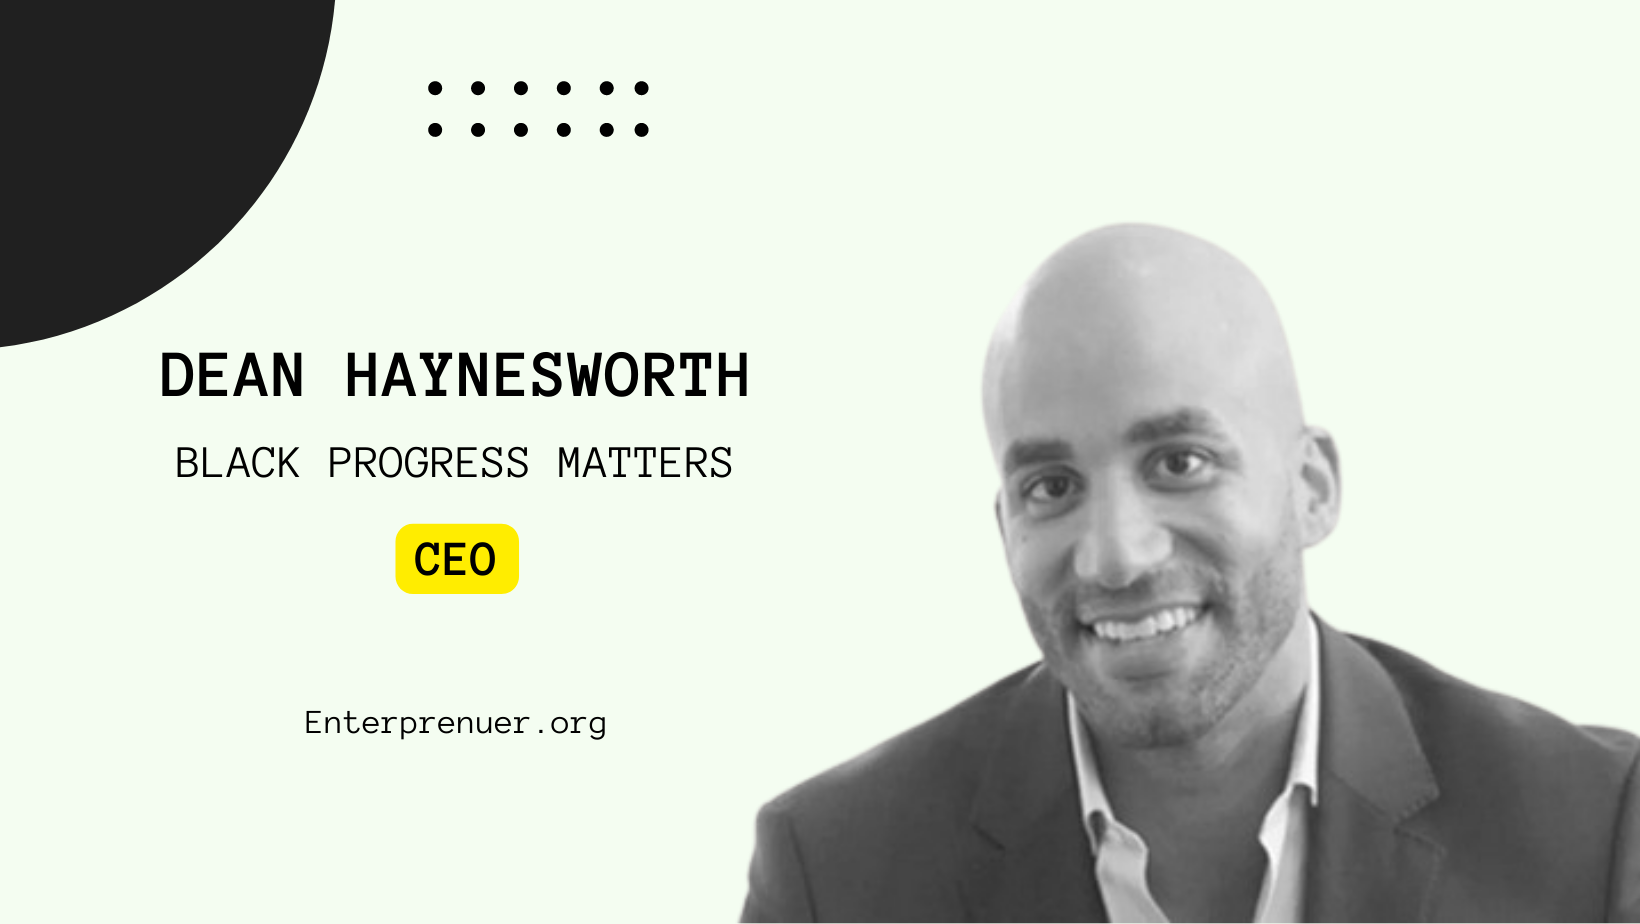 Meet Dean Haynesworth, CEO of Black Progress Matters